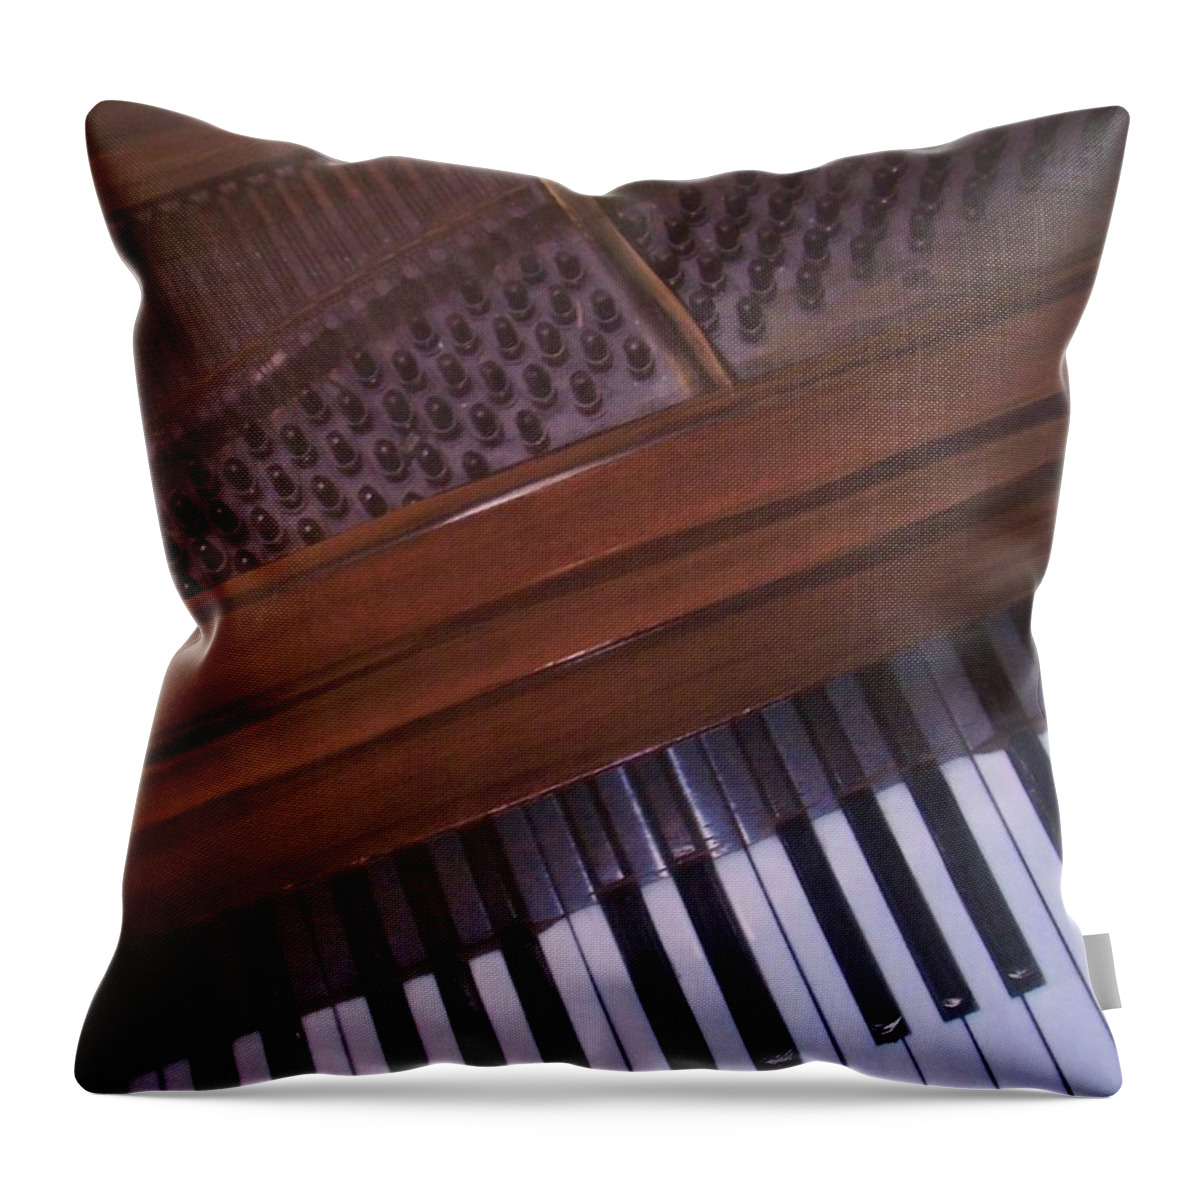 Piano Throw Pillow featuring the mixed media Anita's Piano 1 by Anita Burgermeister